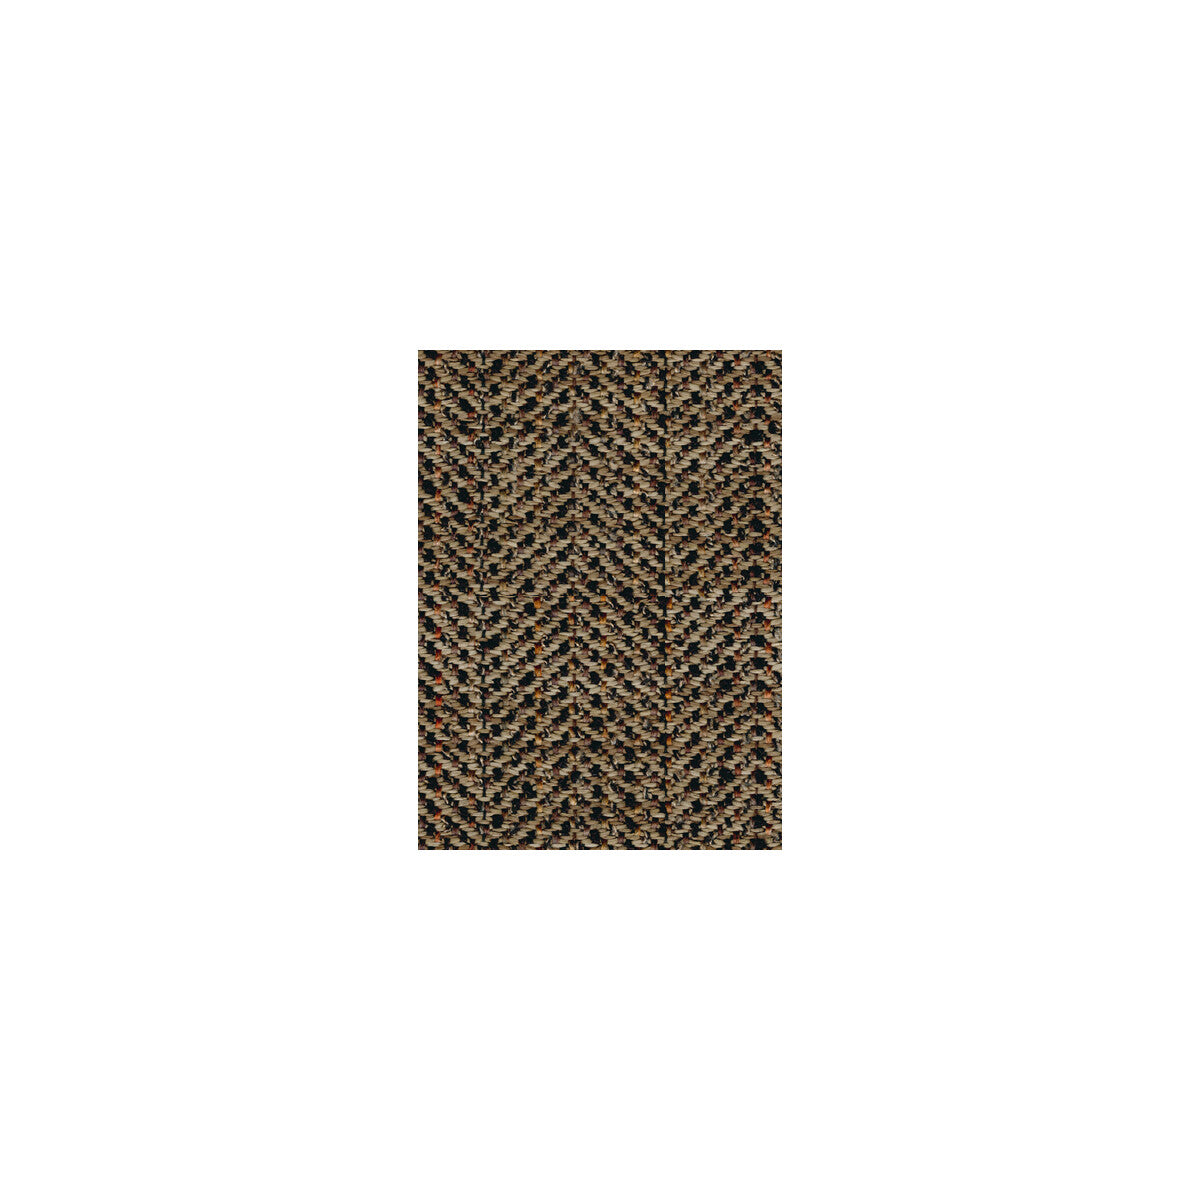 Kravet Smart fabric in 30666-821 color - pattern 30666.821.0 - by Kravet Smart